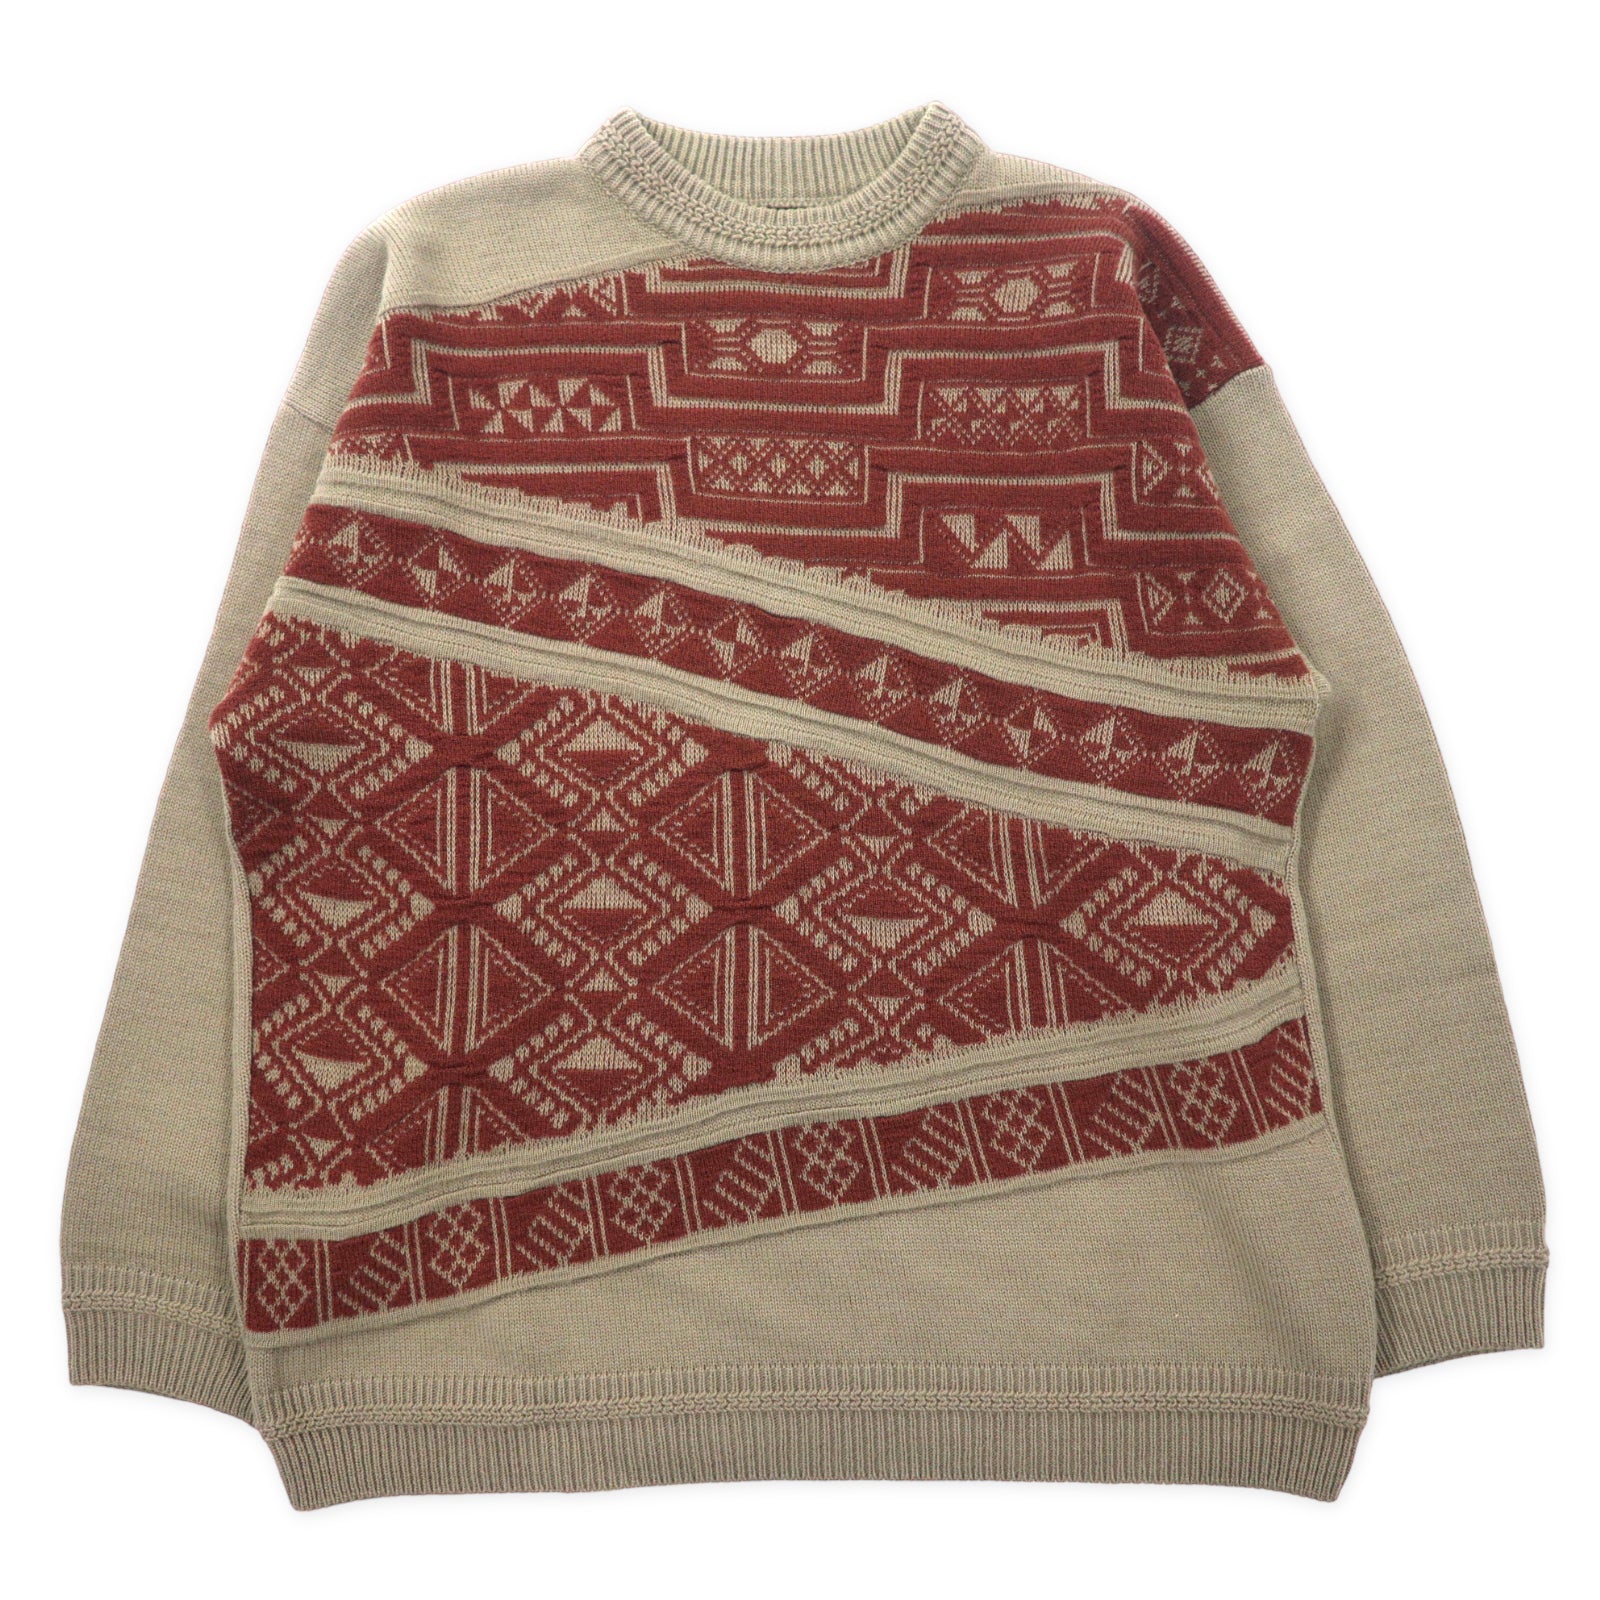 Vintage Patterned Sweater イタリア製 モックネック ニット セーター 52 カーキ  総柄 ウール 幾何学柄